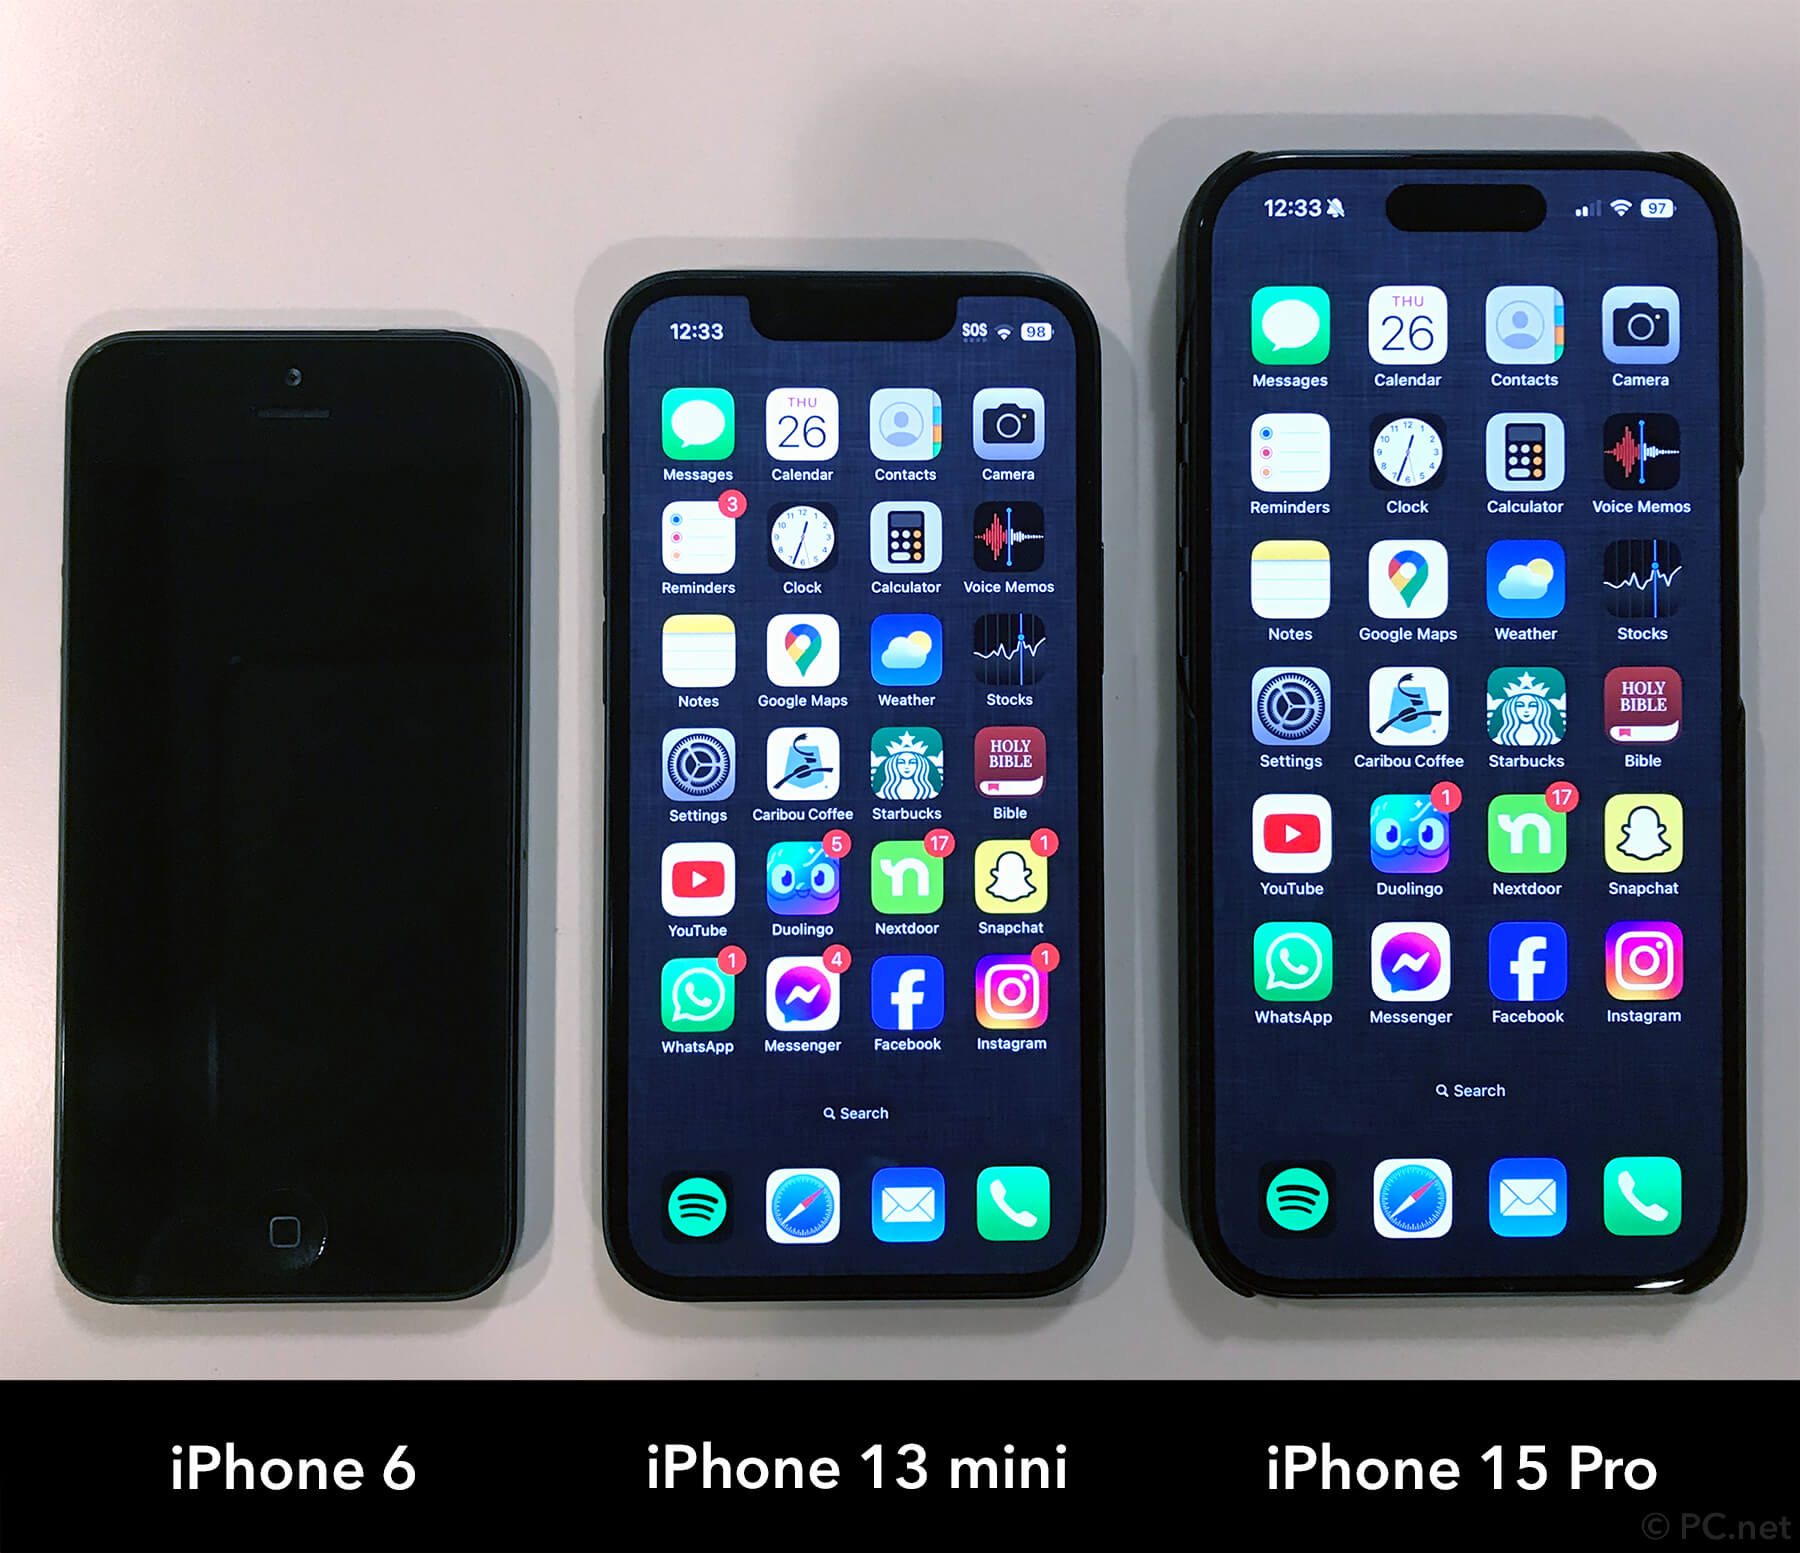 iPhone 6 vs iPhone 13 mini vs iPhone 15 Pro